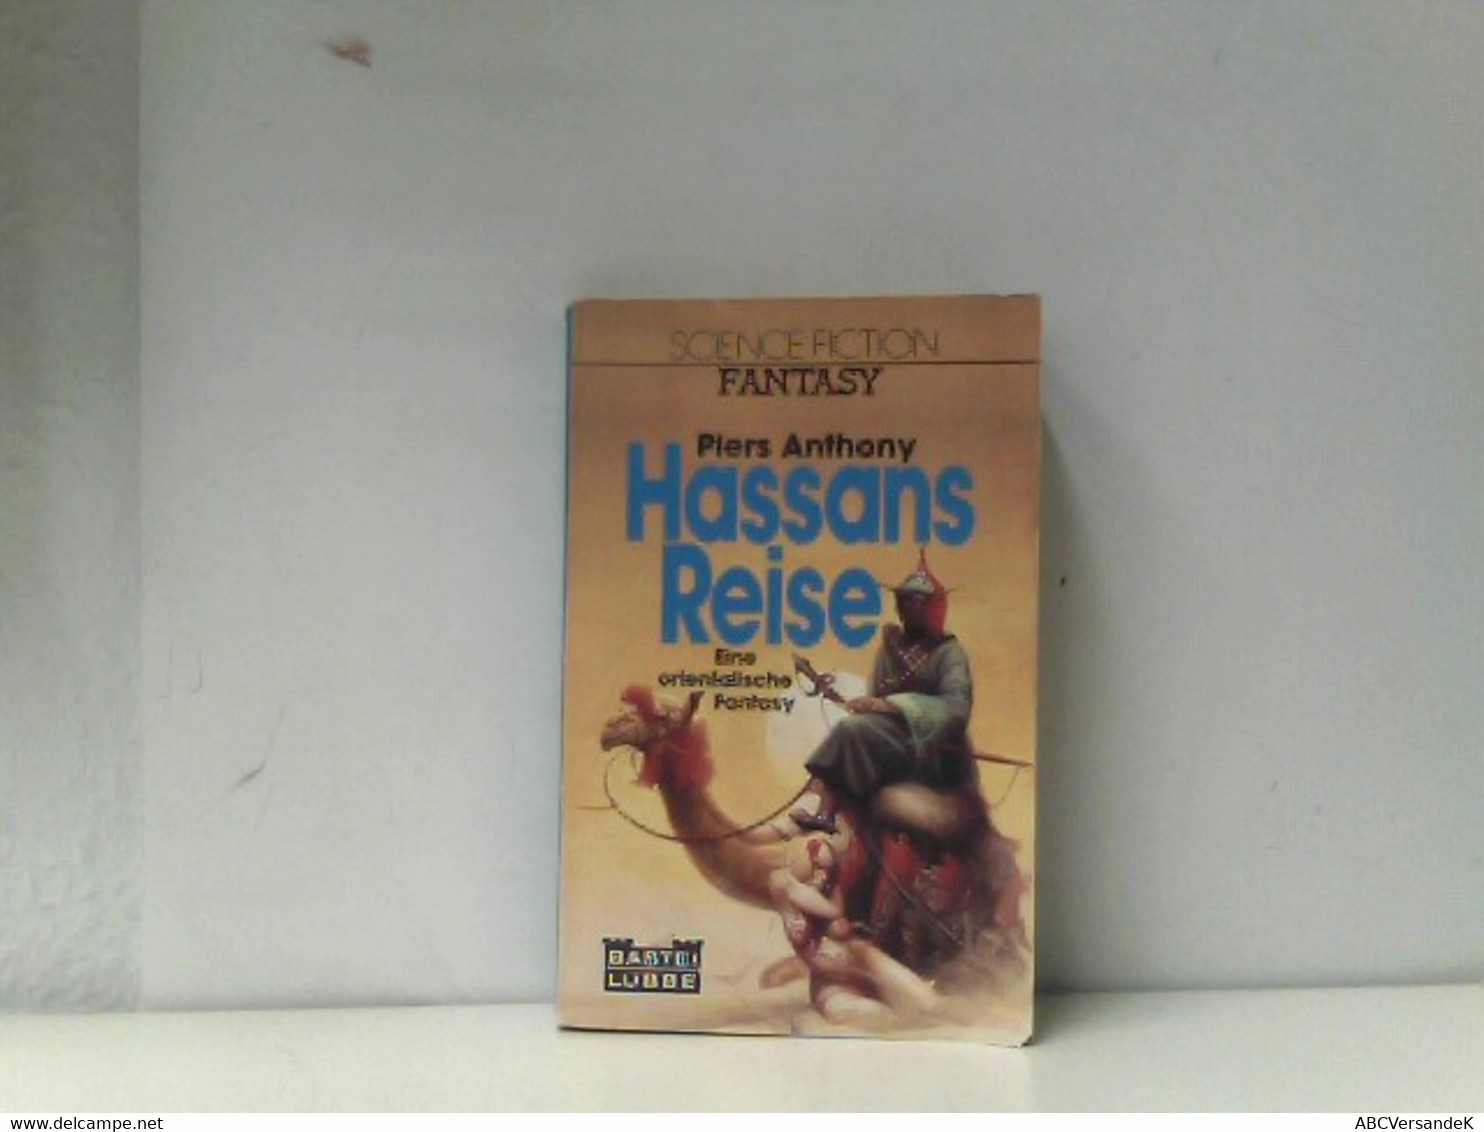 Hassans Reise ; Fantasy-Roman / [Eine Orientalische Fantasy] - Ciencia Ficción